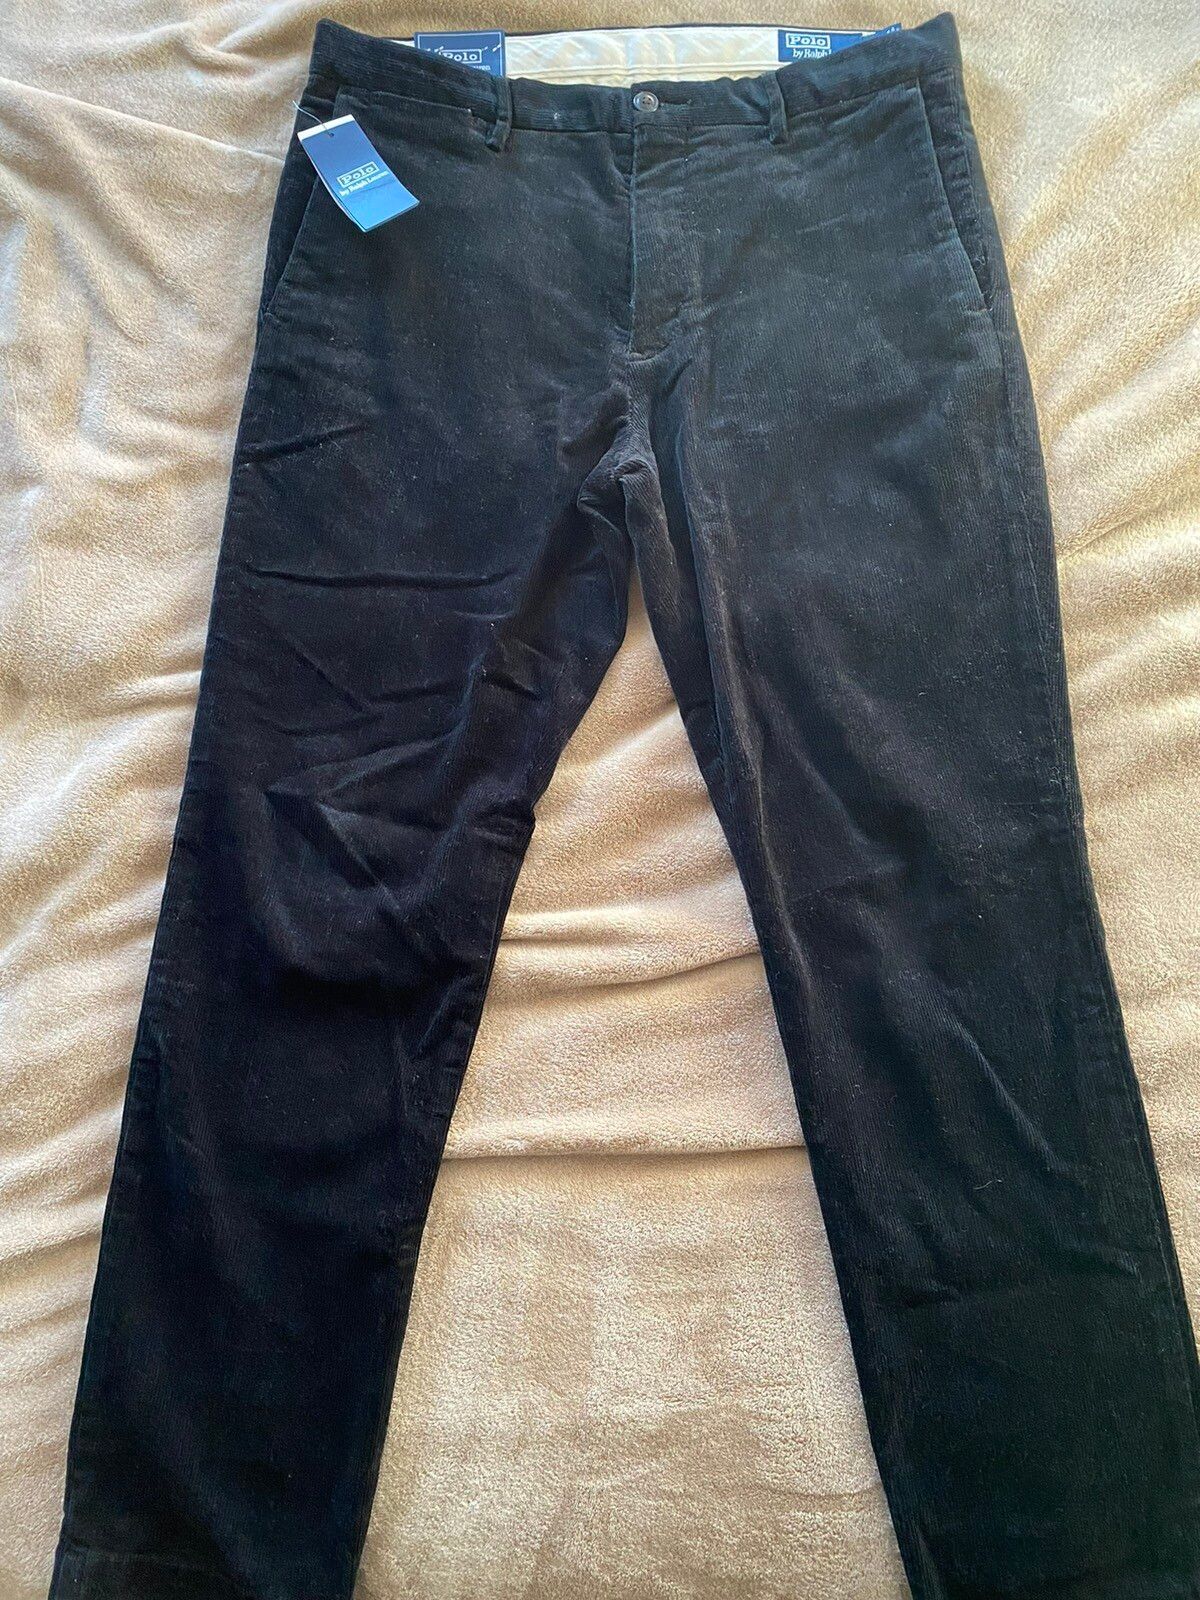 Polo Ralph Lauren Polo Corduroy Pants 32x30 | Grailed